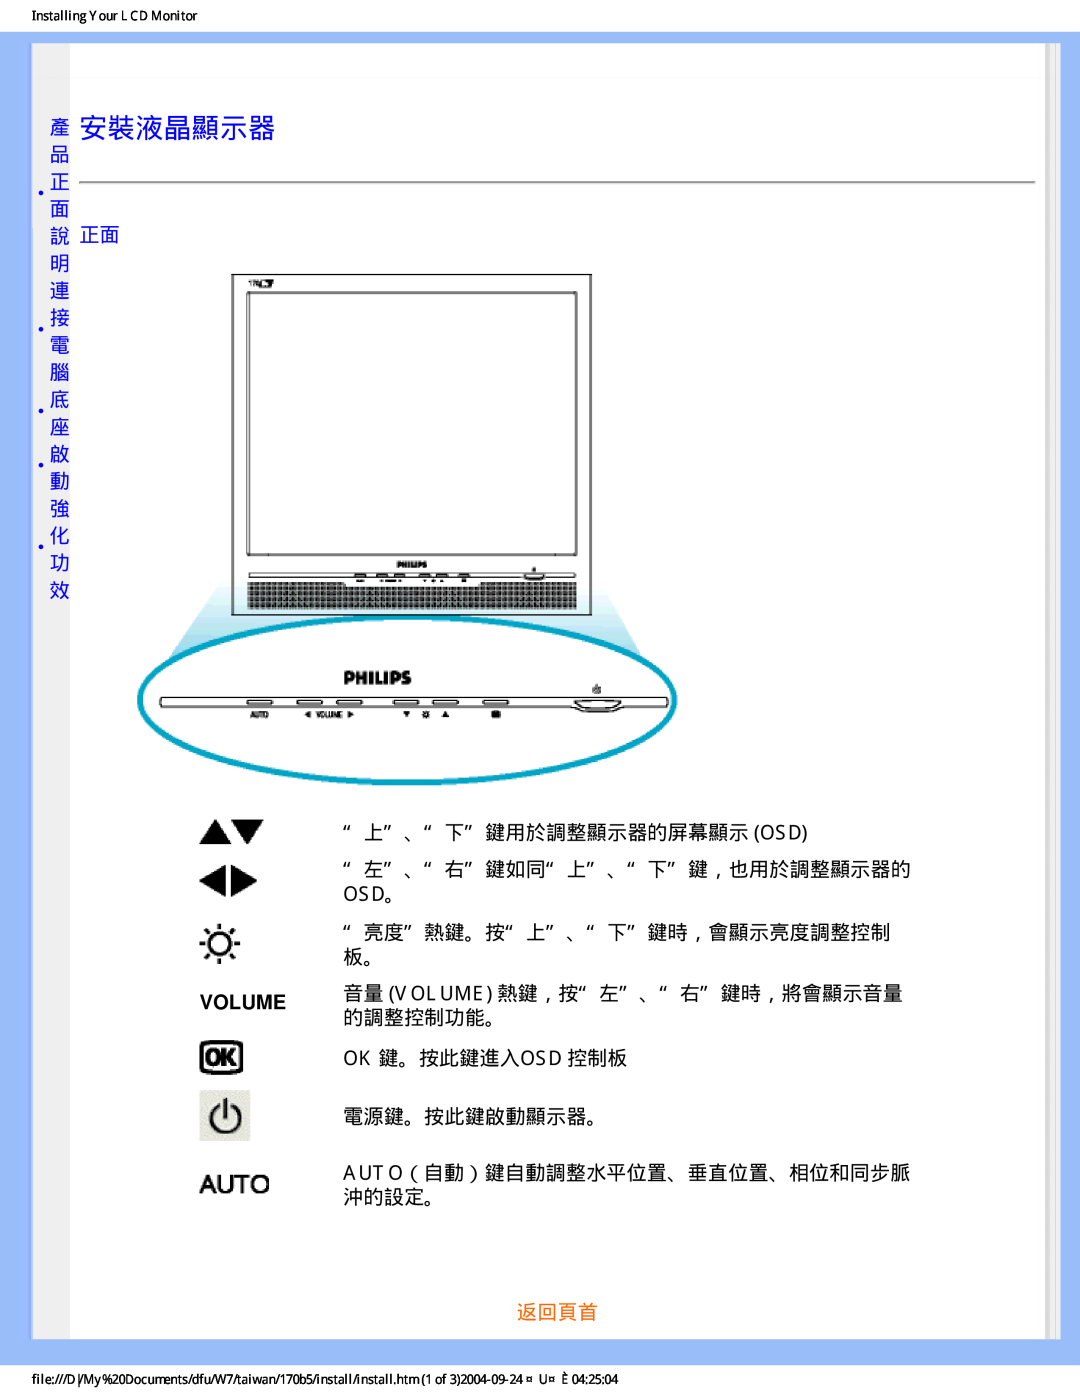 Philips 170B5 user manual 產 安裝液晶顯示器, 說 正面 明 連 接電 腦 底座 啟動 強 化功 效, Volume, 返回頁首, Installing Your LCD Monitor 